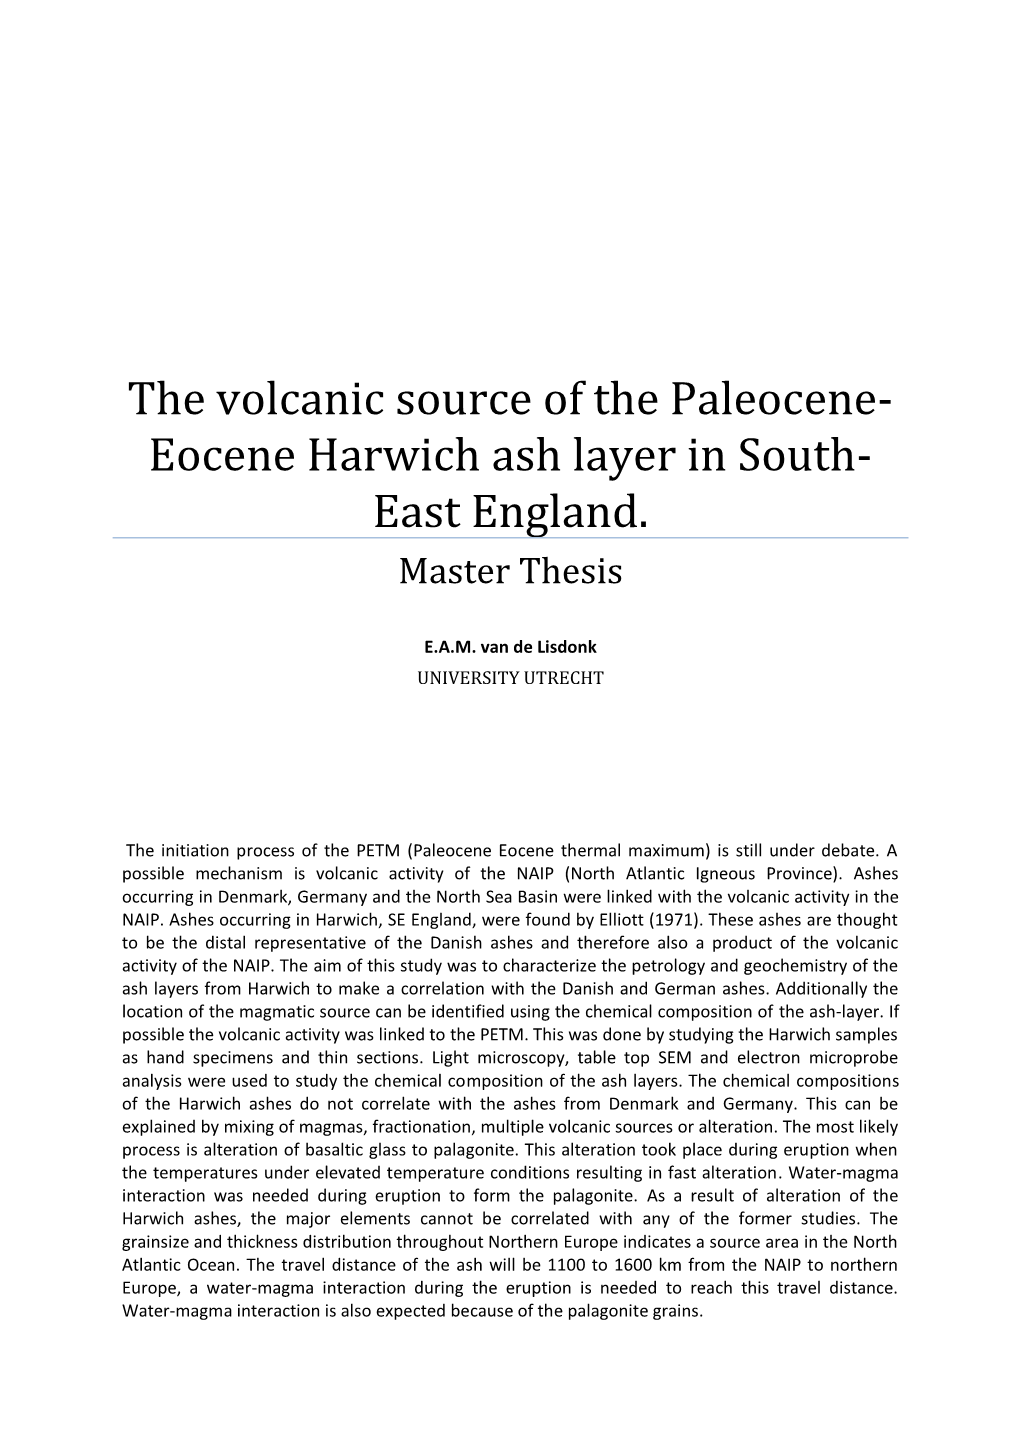 The Volcanic Source of the Paleocene-Eocene Harwich Ash